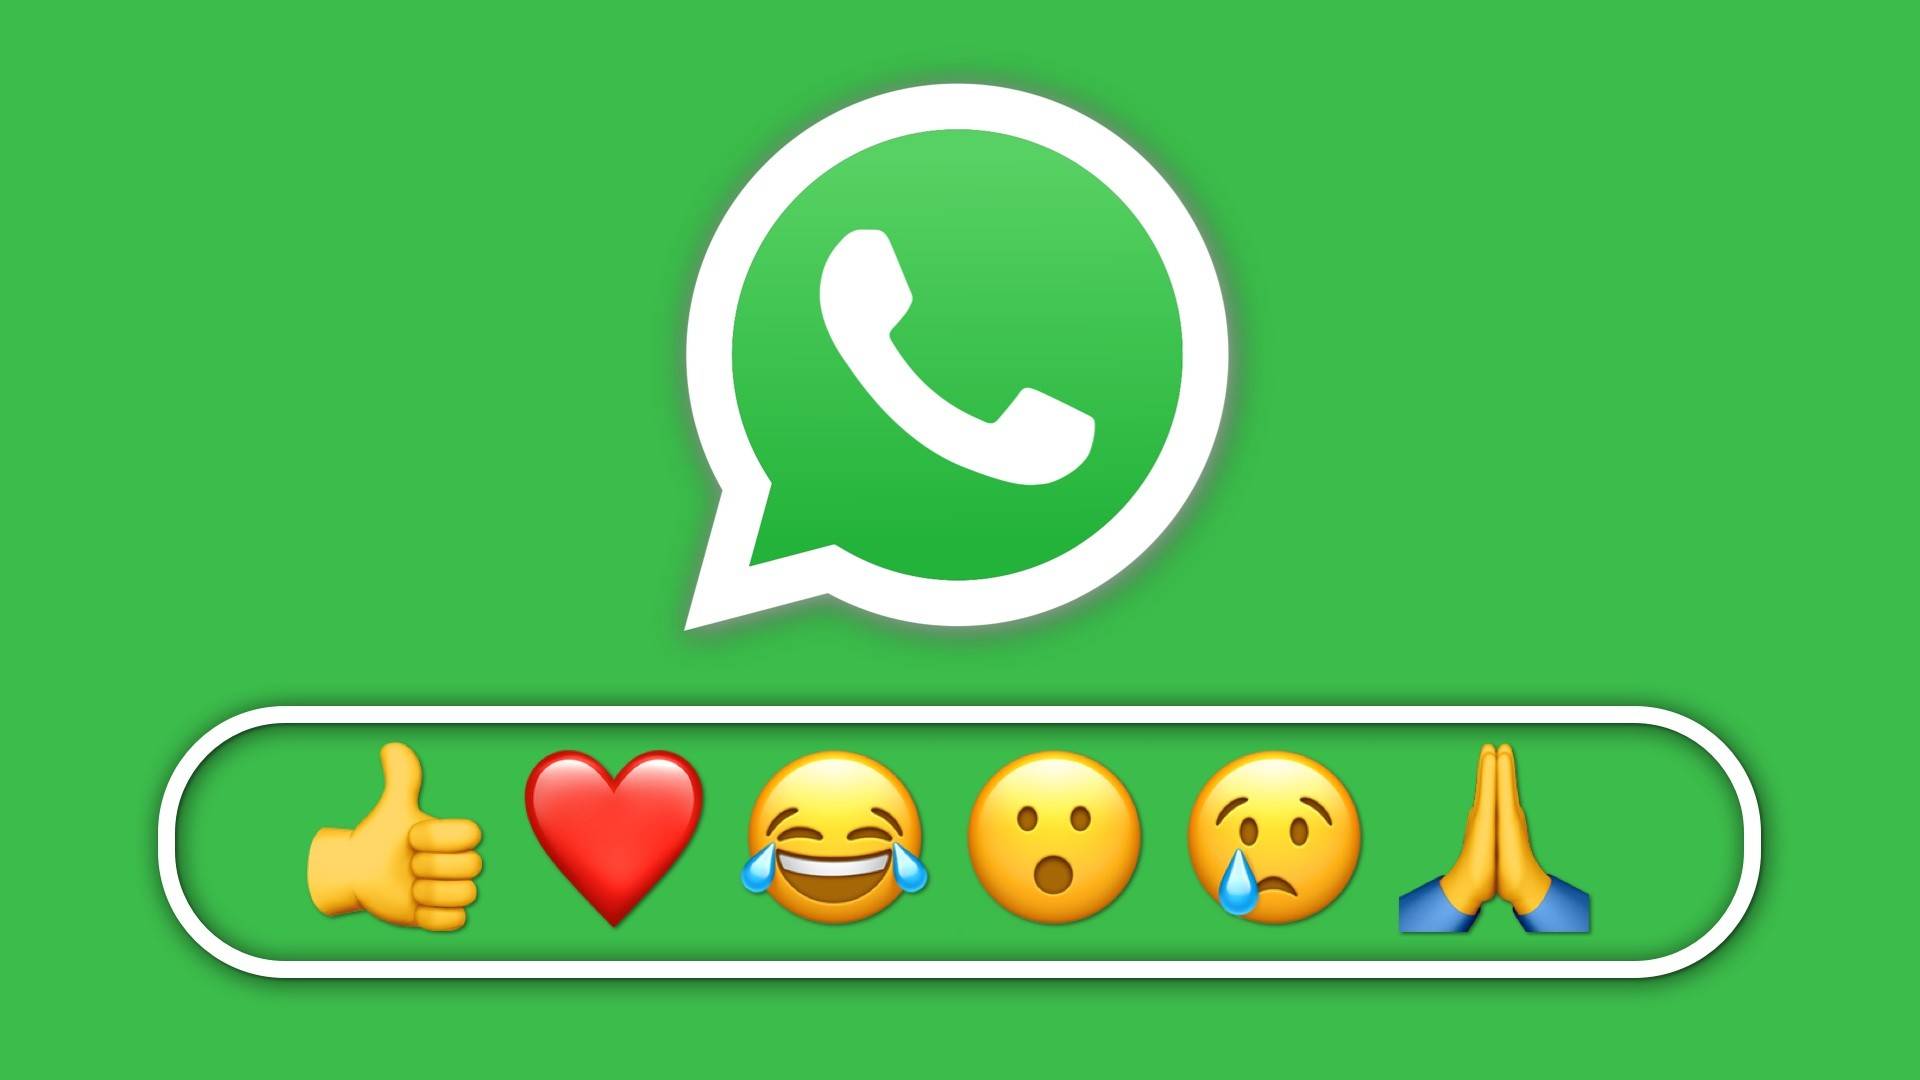 WhatsApp Message Reactions